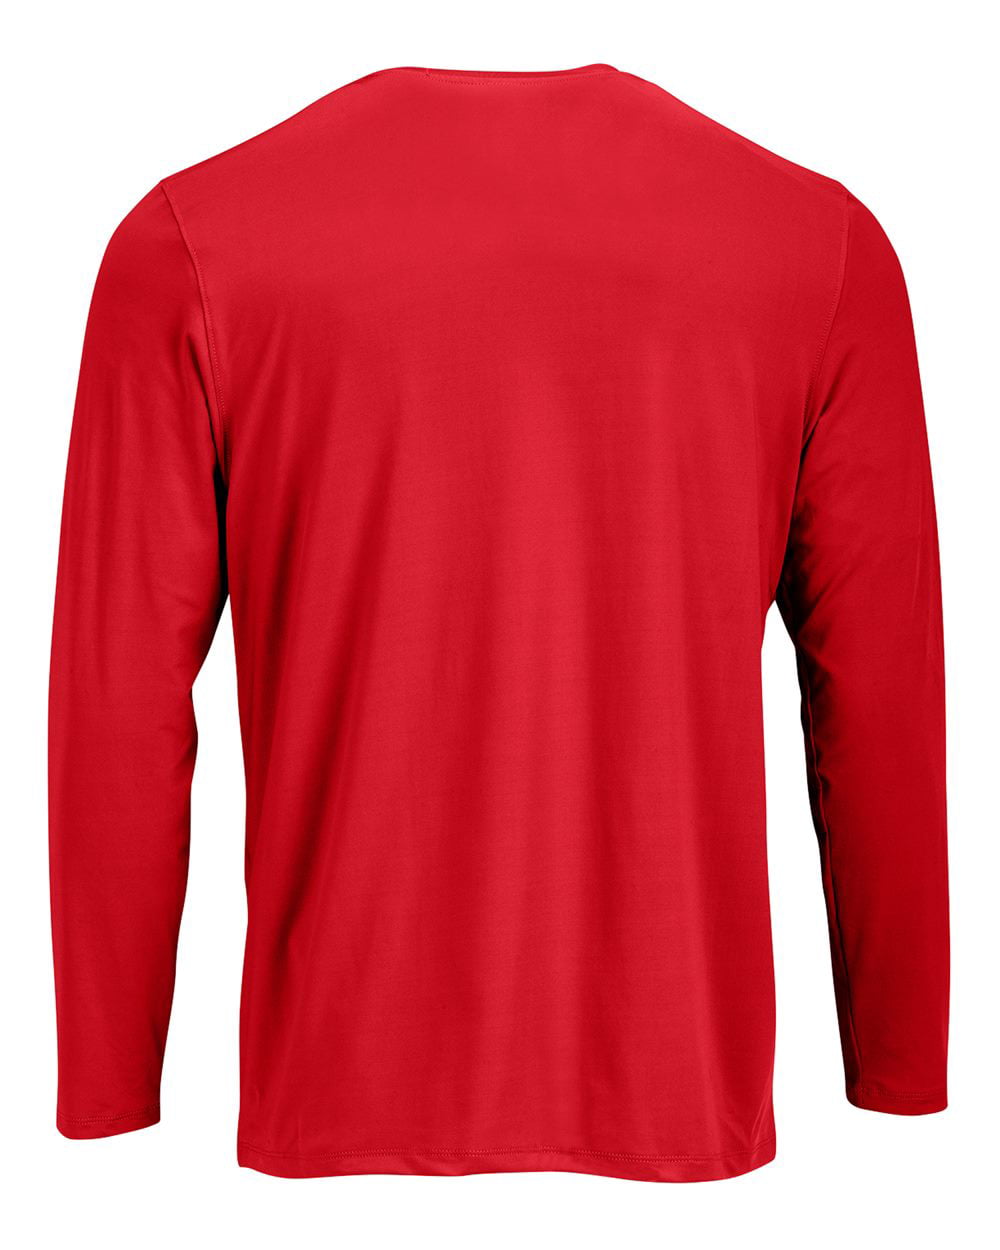 Paragon Aruba Extreme Performance Long Sleeve T-Shirt, Red - L 